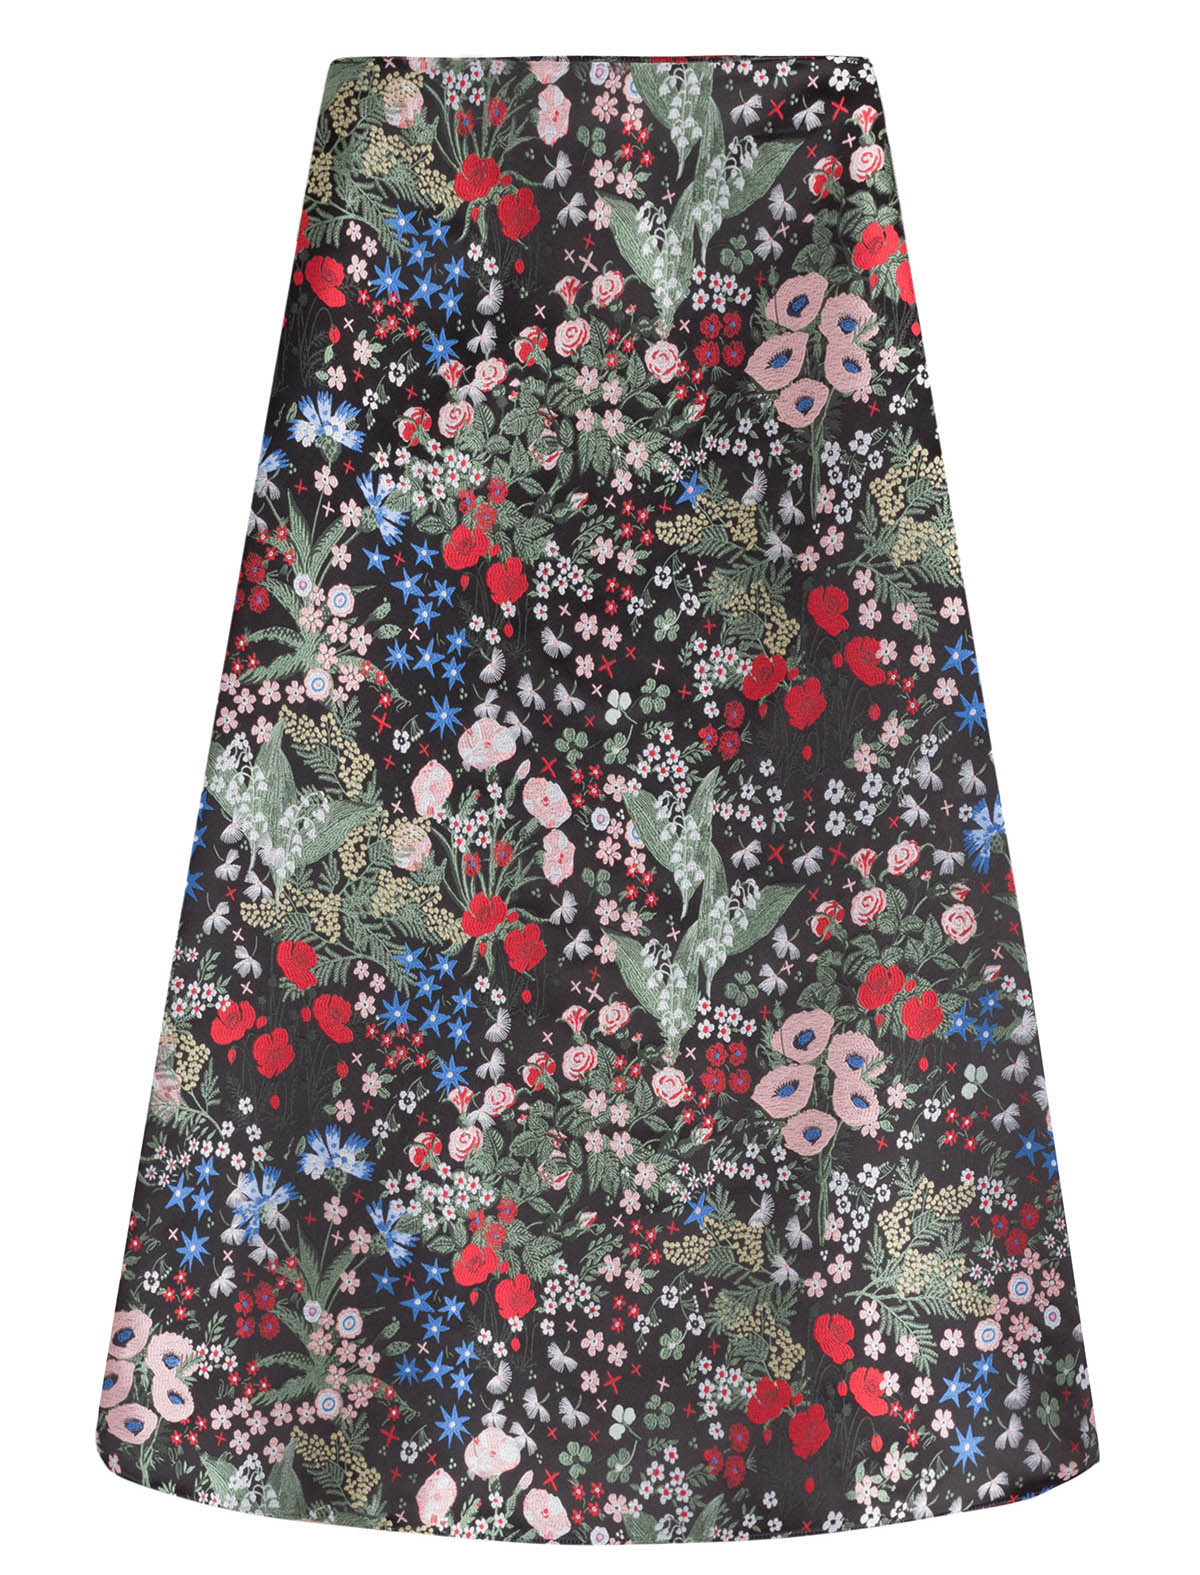 Valentino printed silk midi skirt Celia Birtwell print inspired by Sandro Botticelli Primavera painting